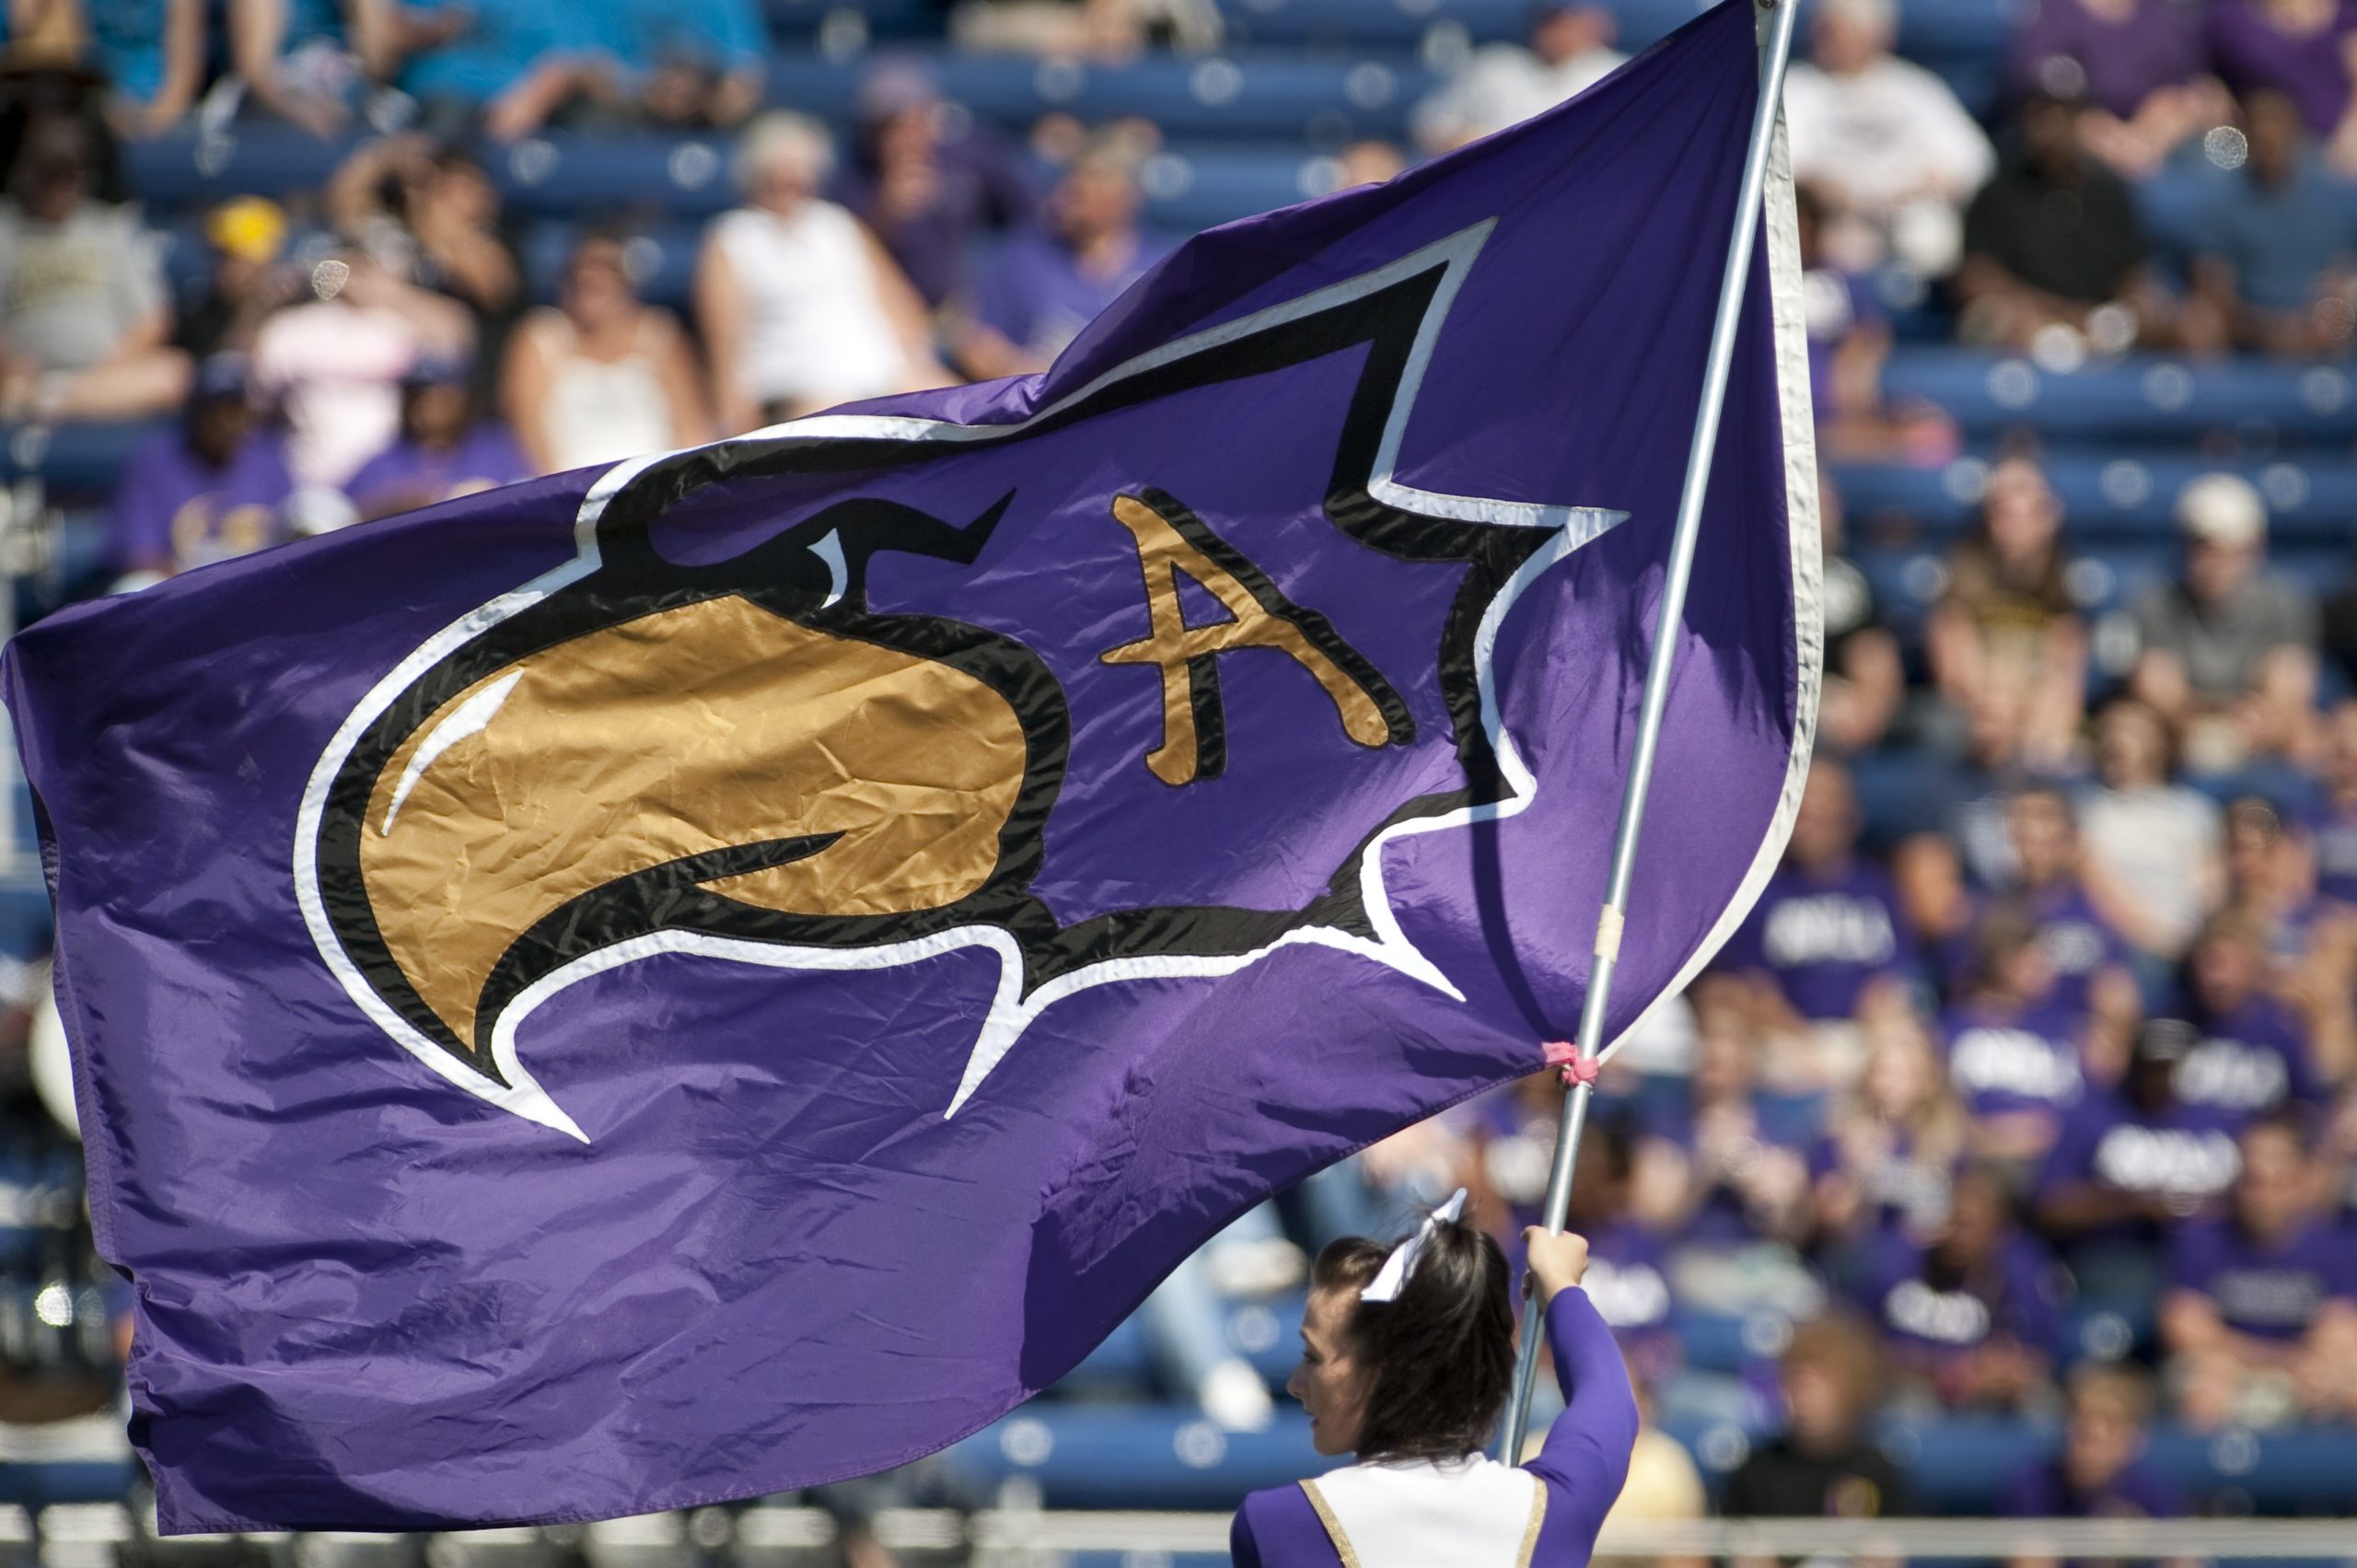 Avila University Eagle logo flag being waved at football game by cheerleader